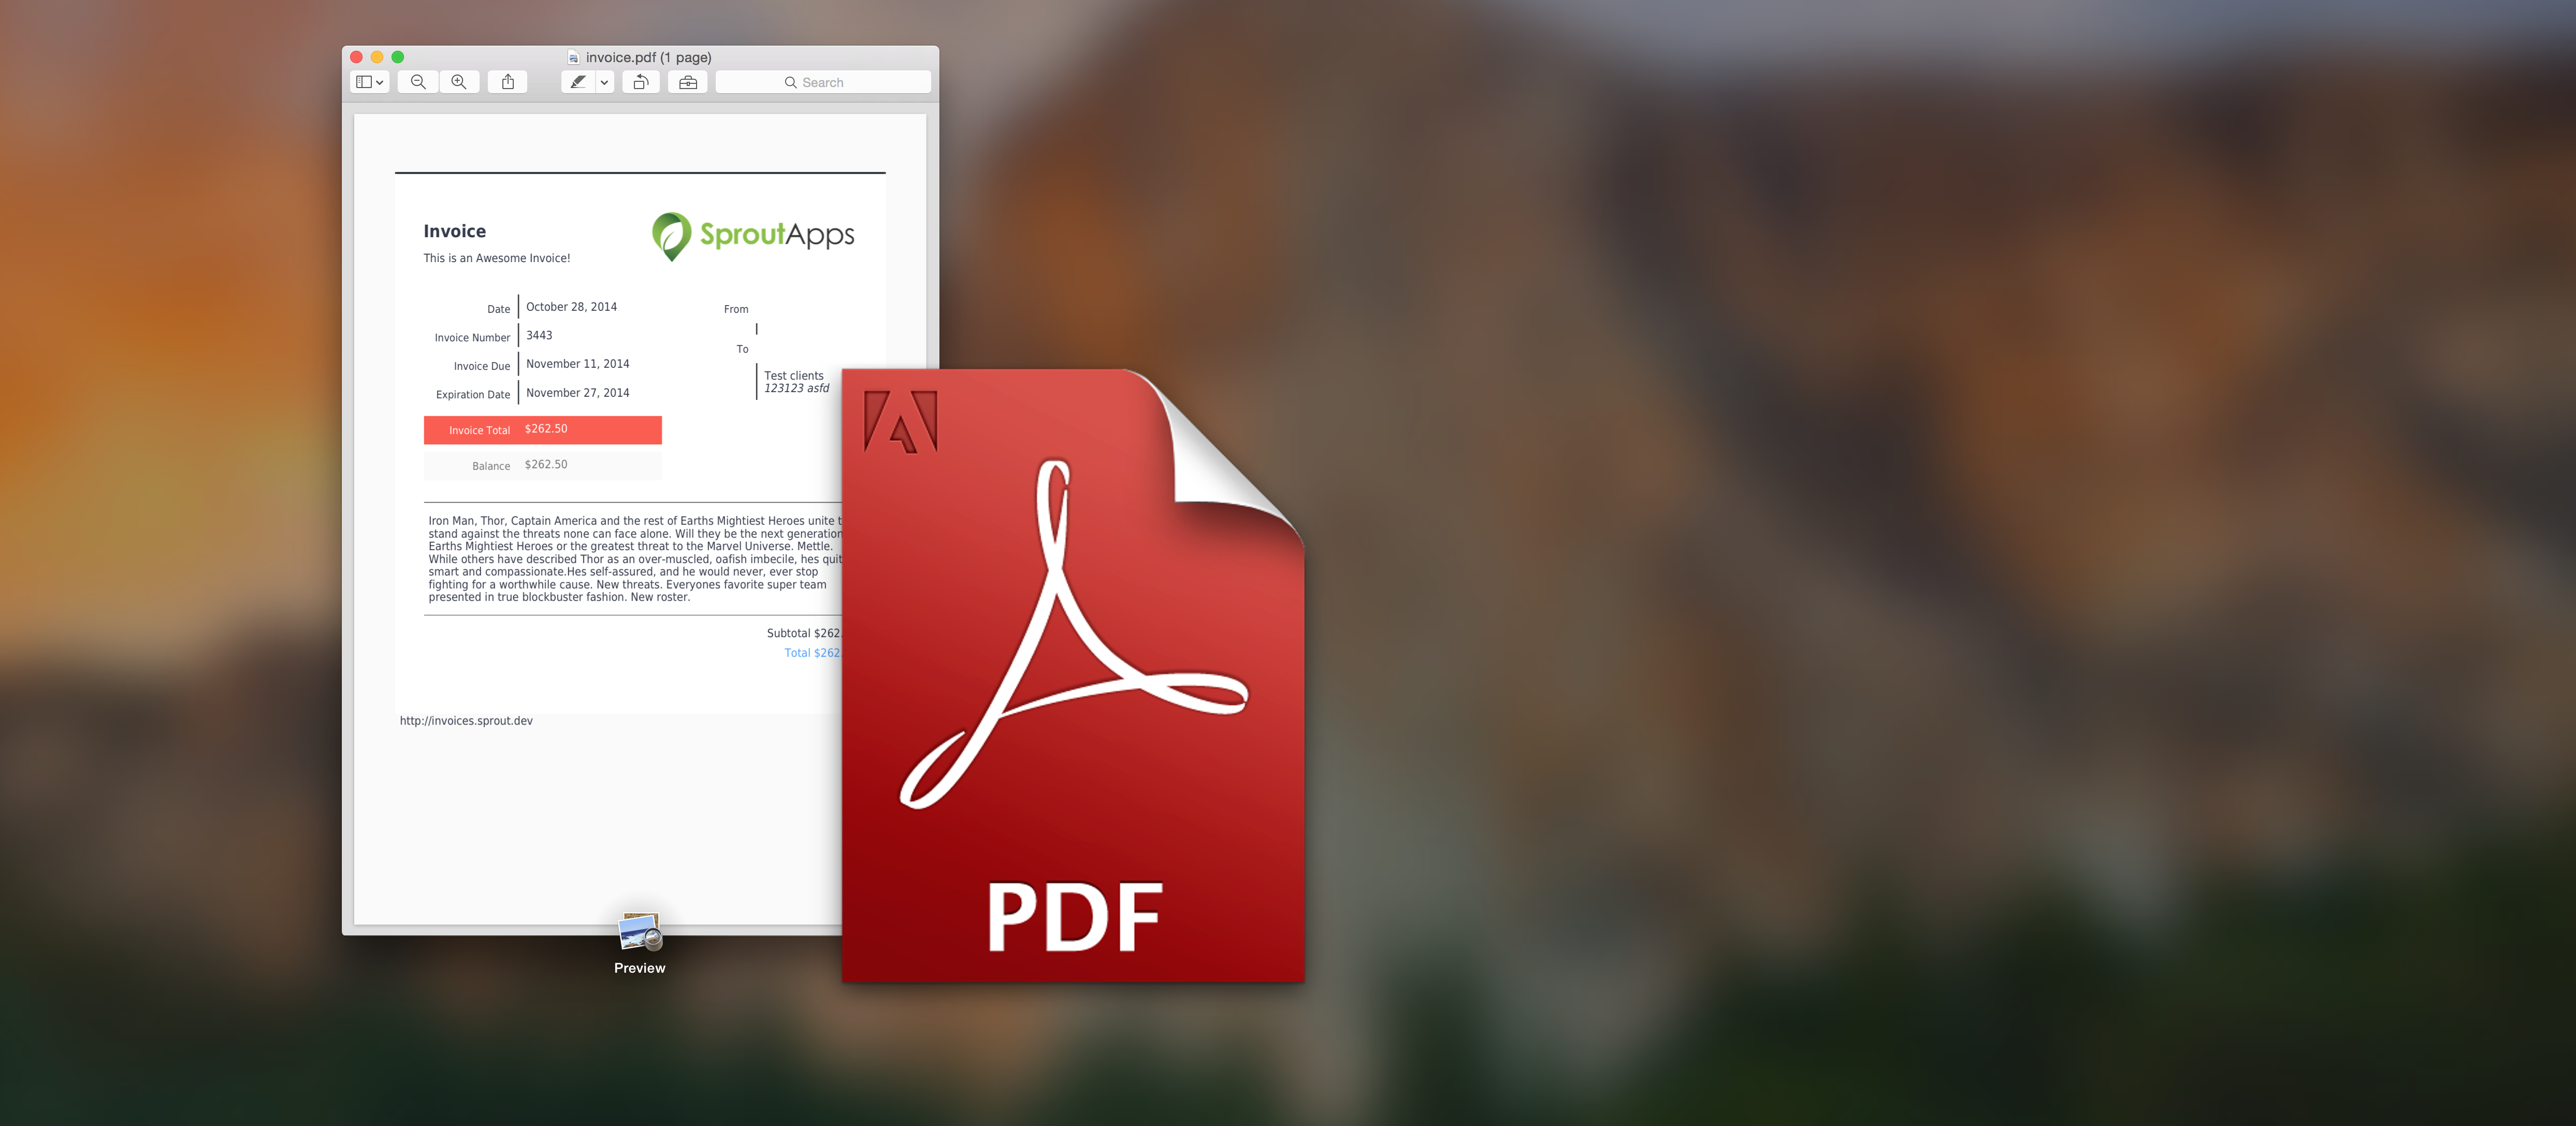 Image of PDF logo and invoice